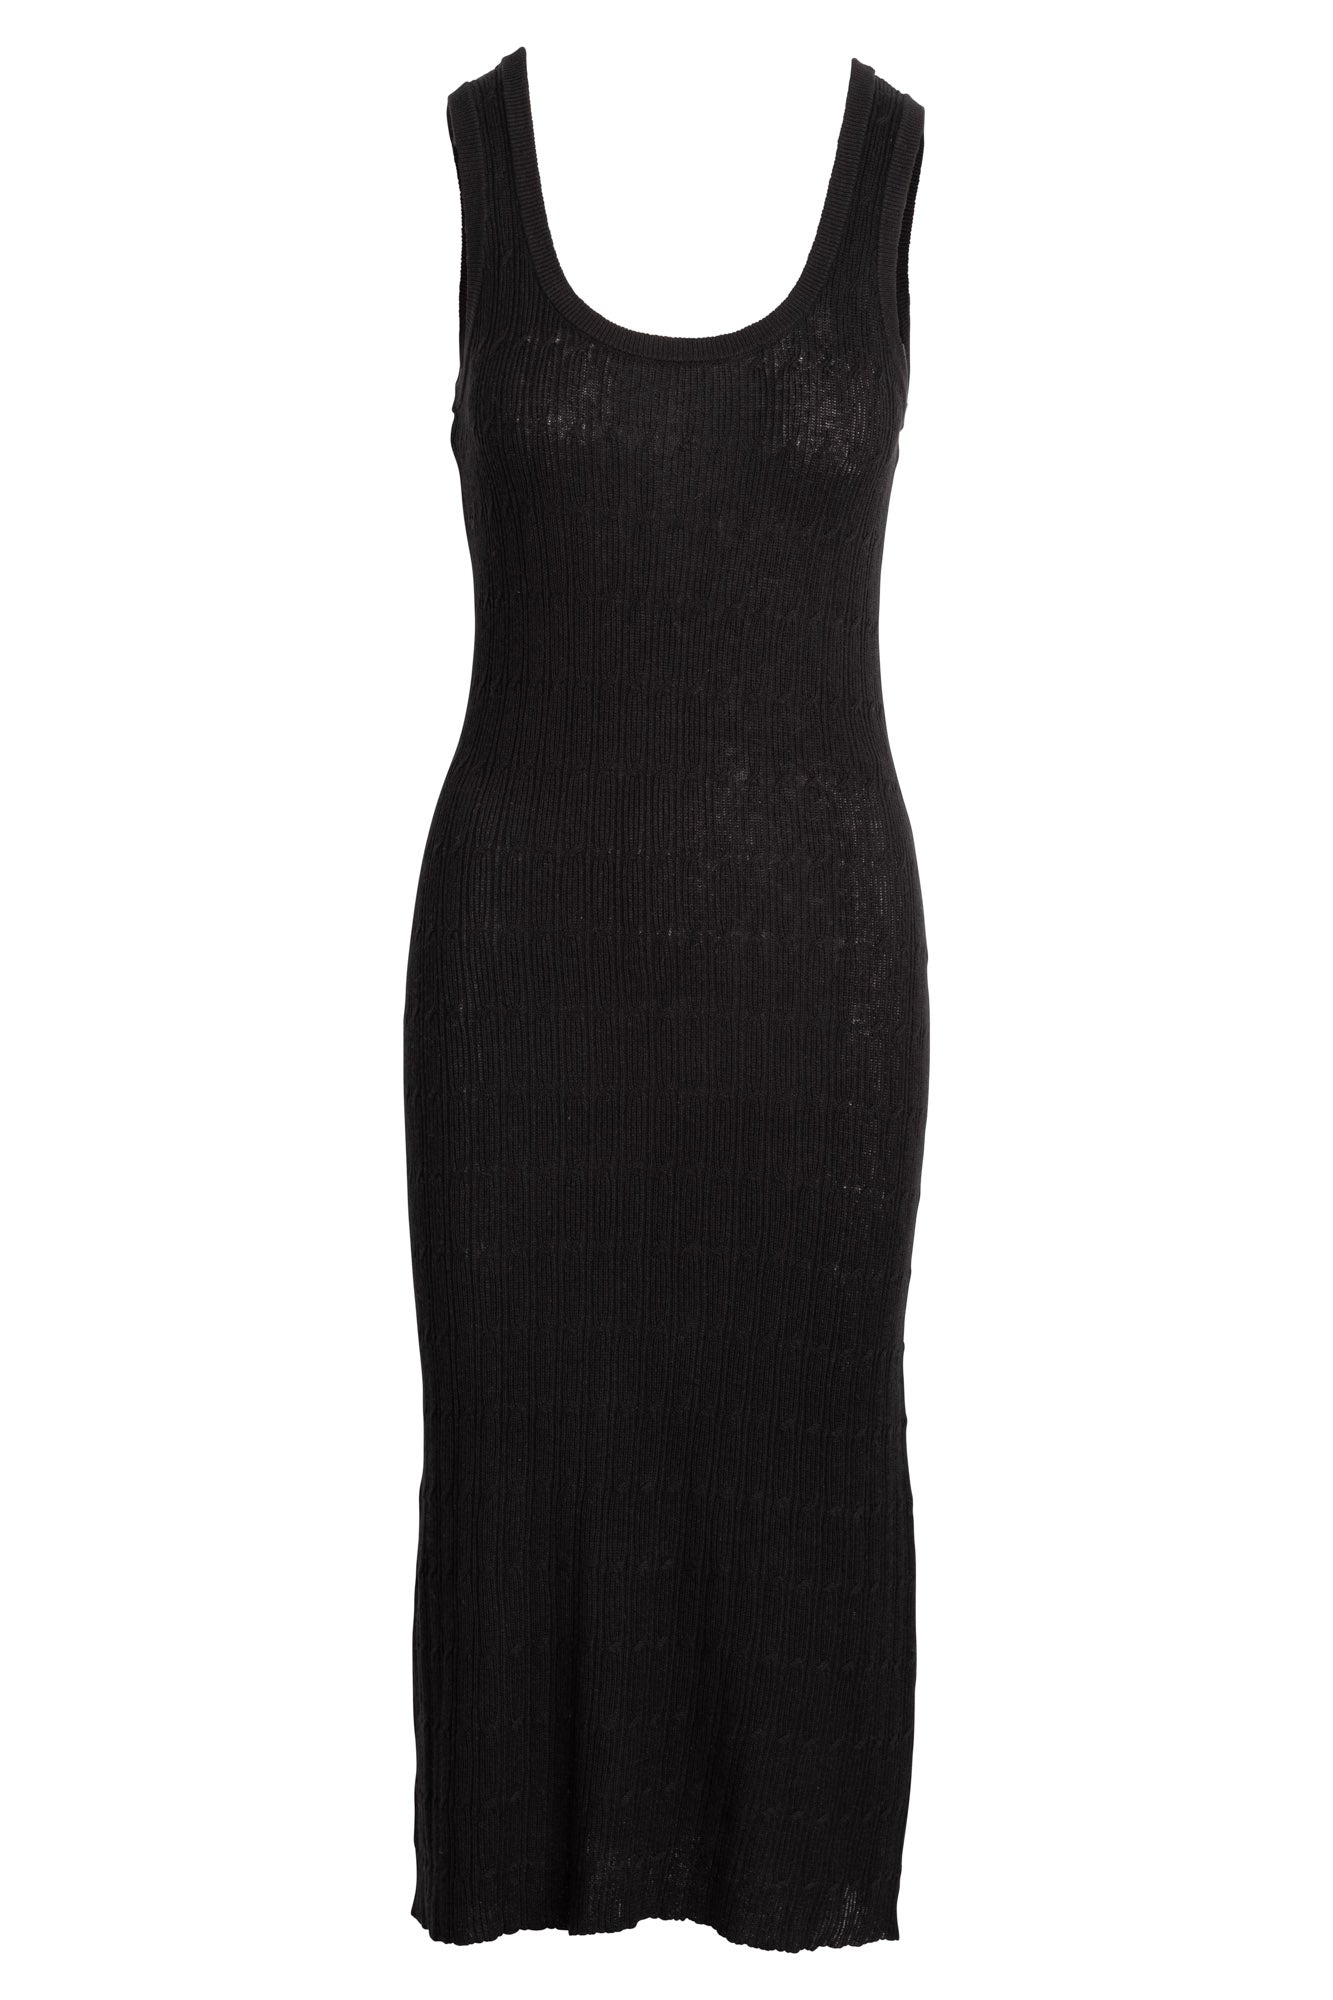 Naadam - Organic Hemp Cotton Cable Scoop Neck Dress in Black